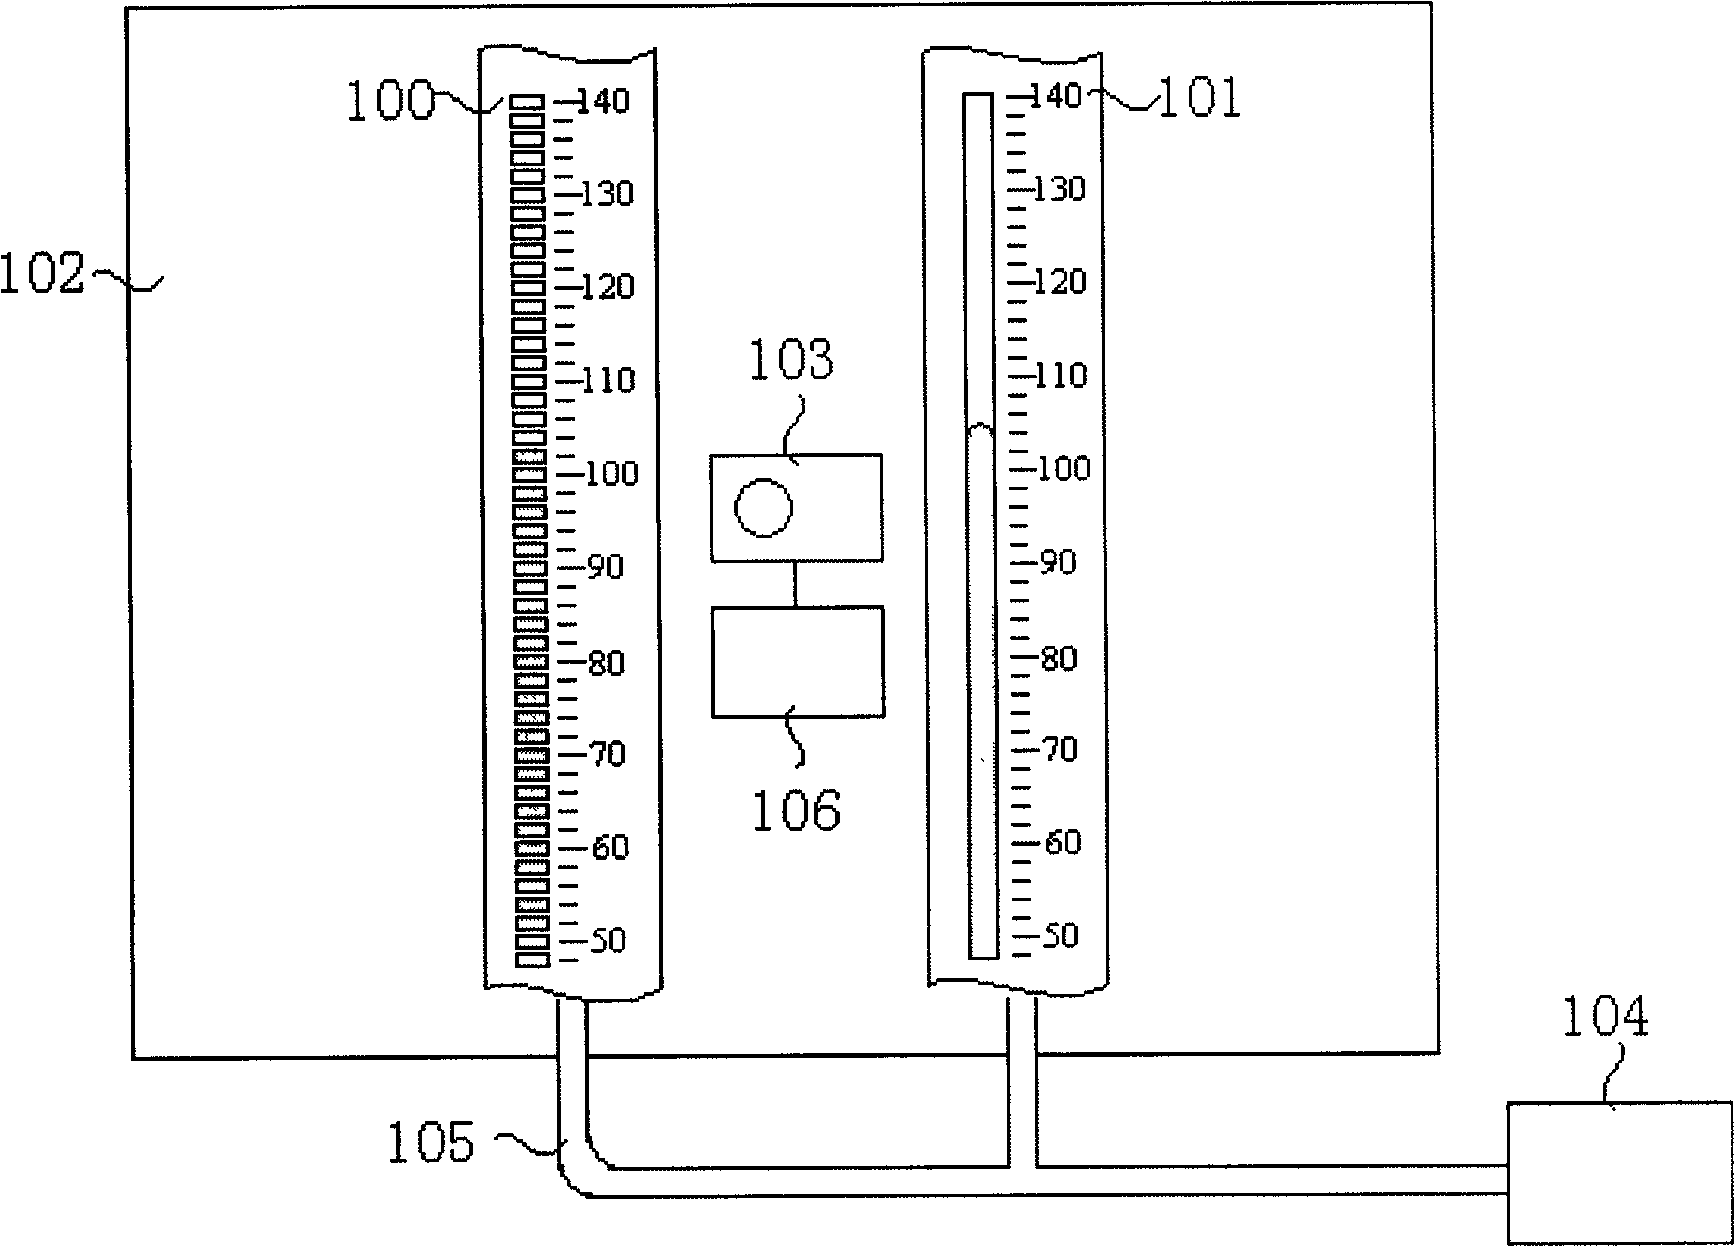 Column display pressure evaluation device